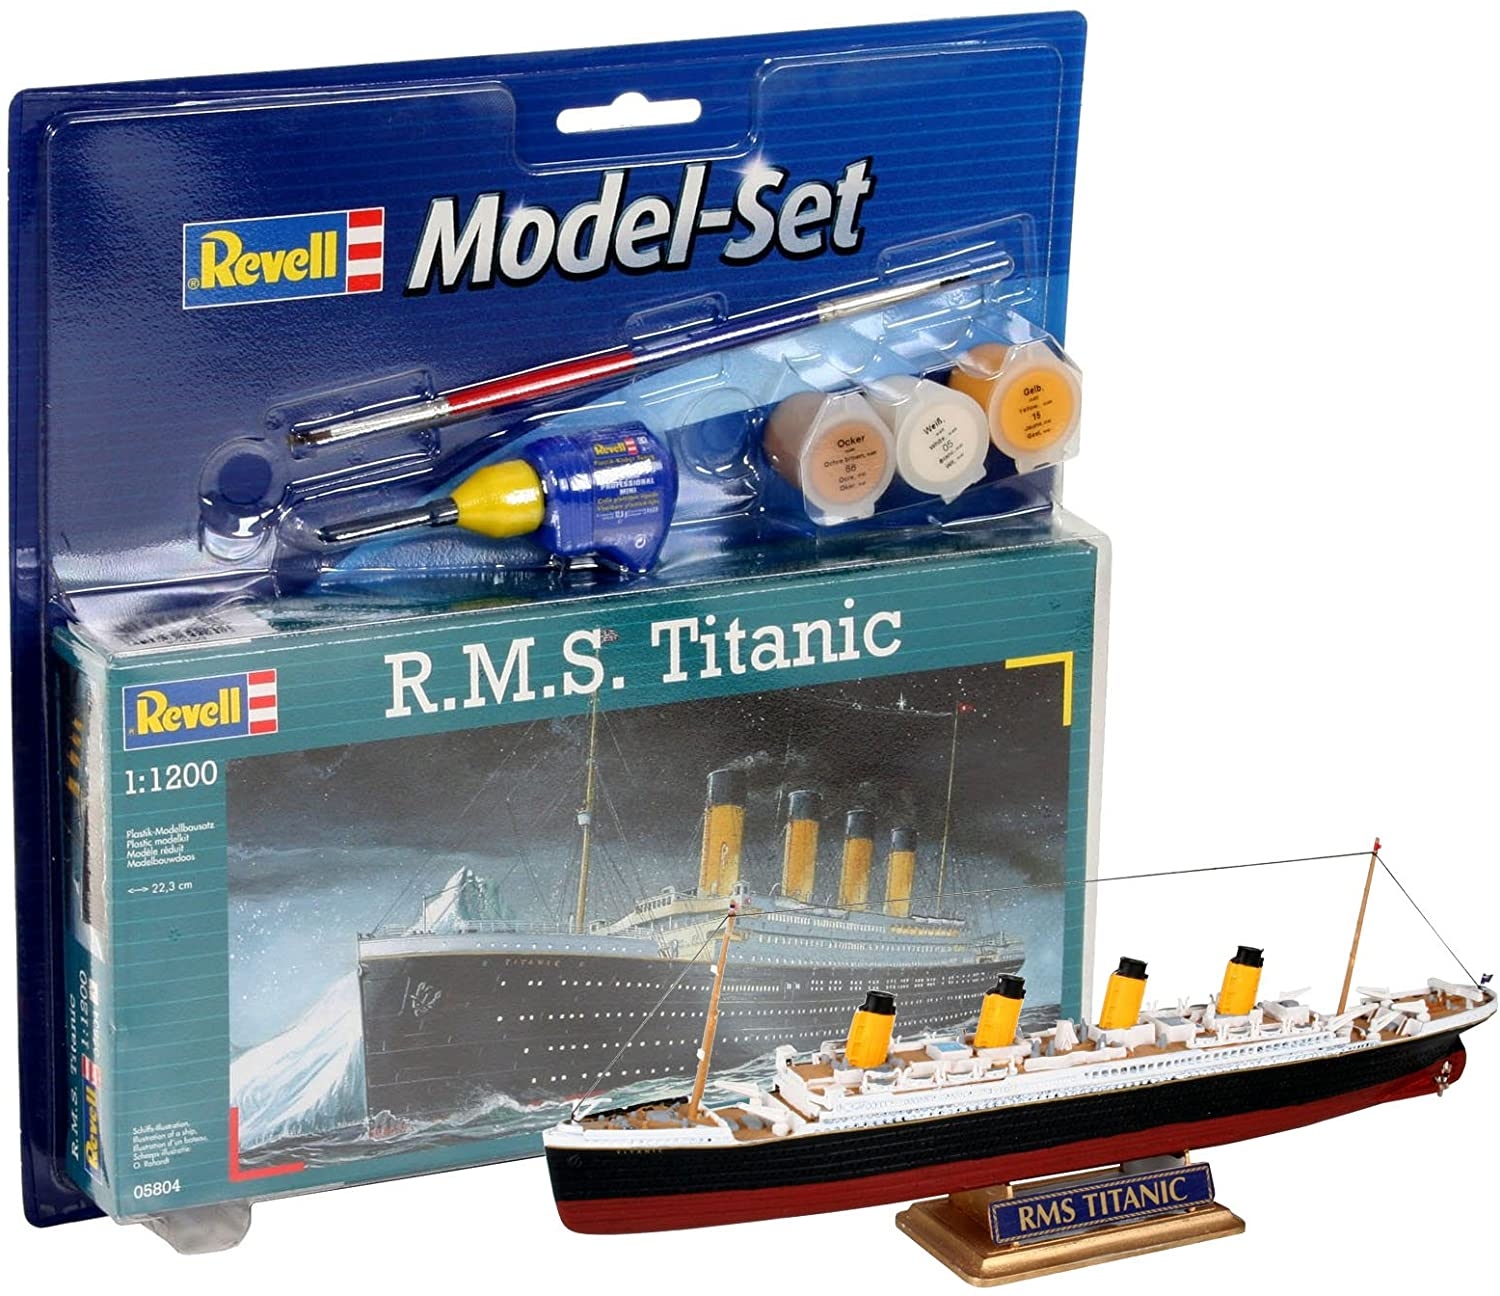 Beginners scale models, Ships